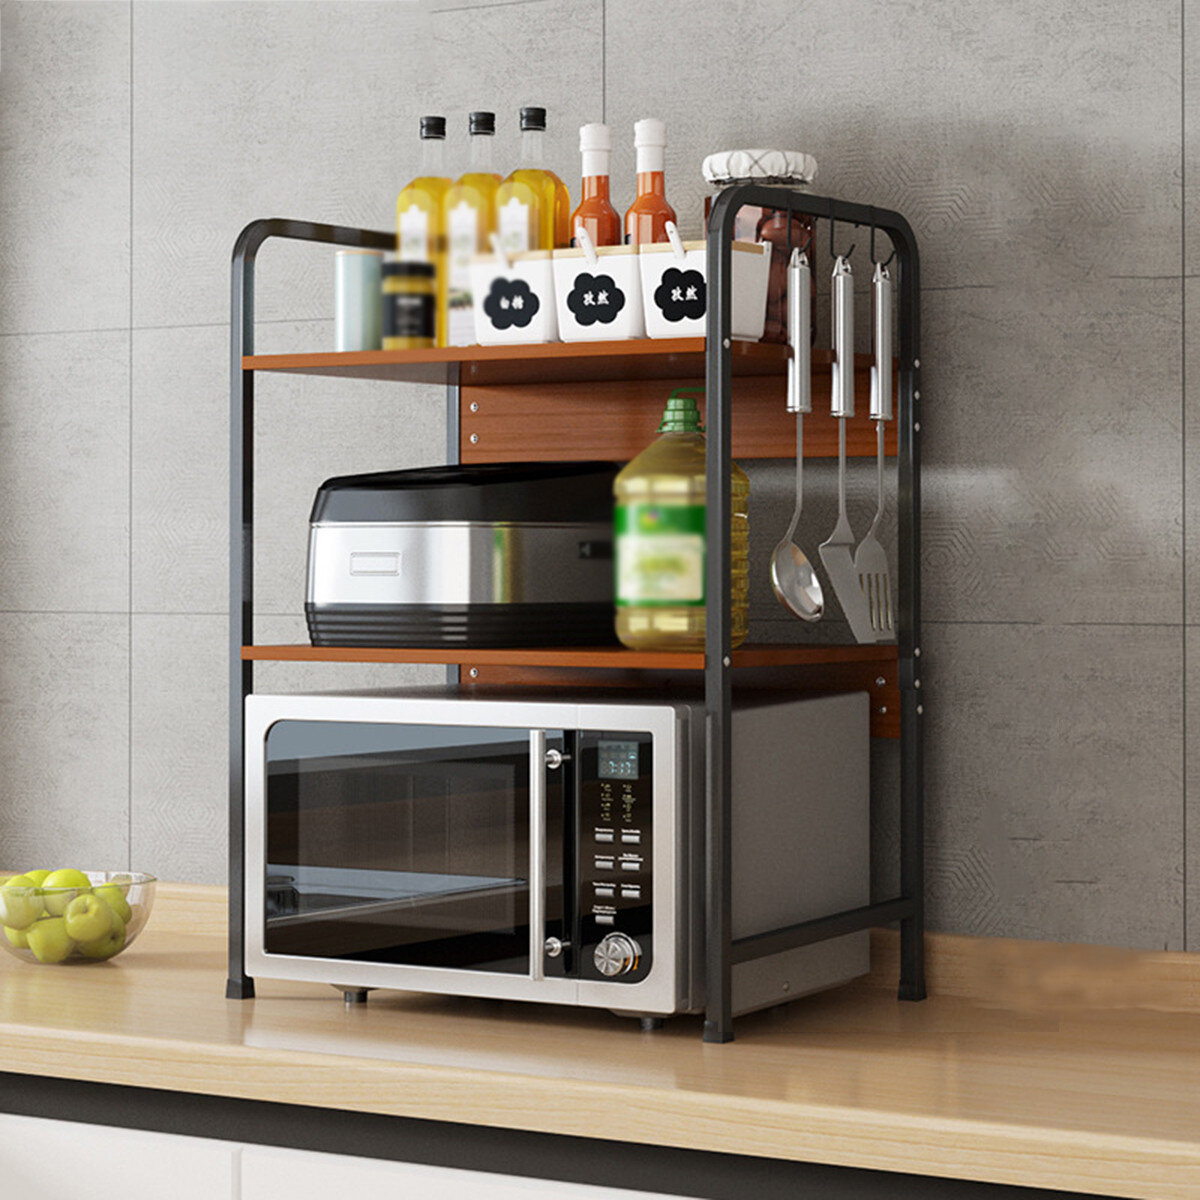 Image of 2 Tiers Microwave Oven Rack Stand Storage Shelf Kitchen Storage Bracket Space Saving Kitchen Organizer with Hooks